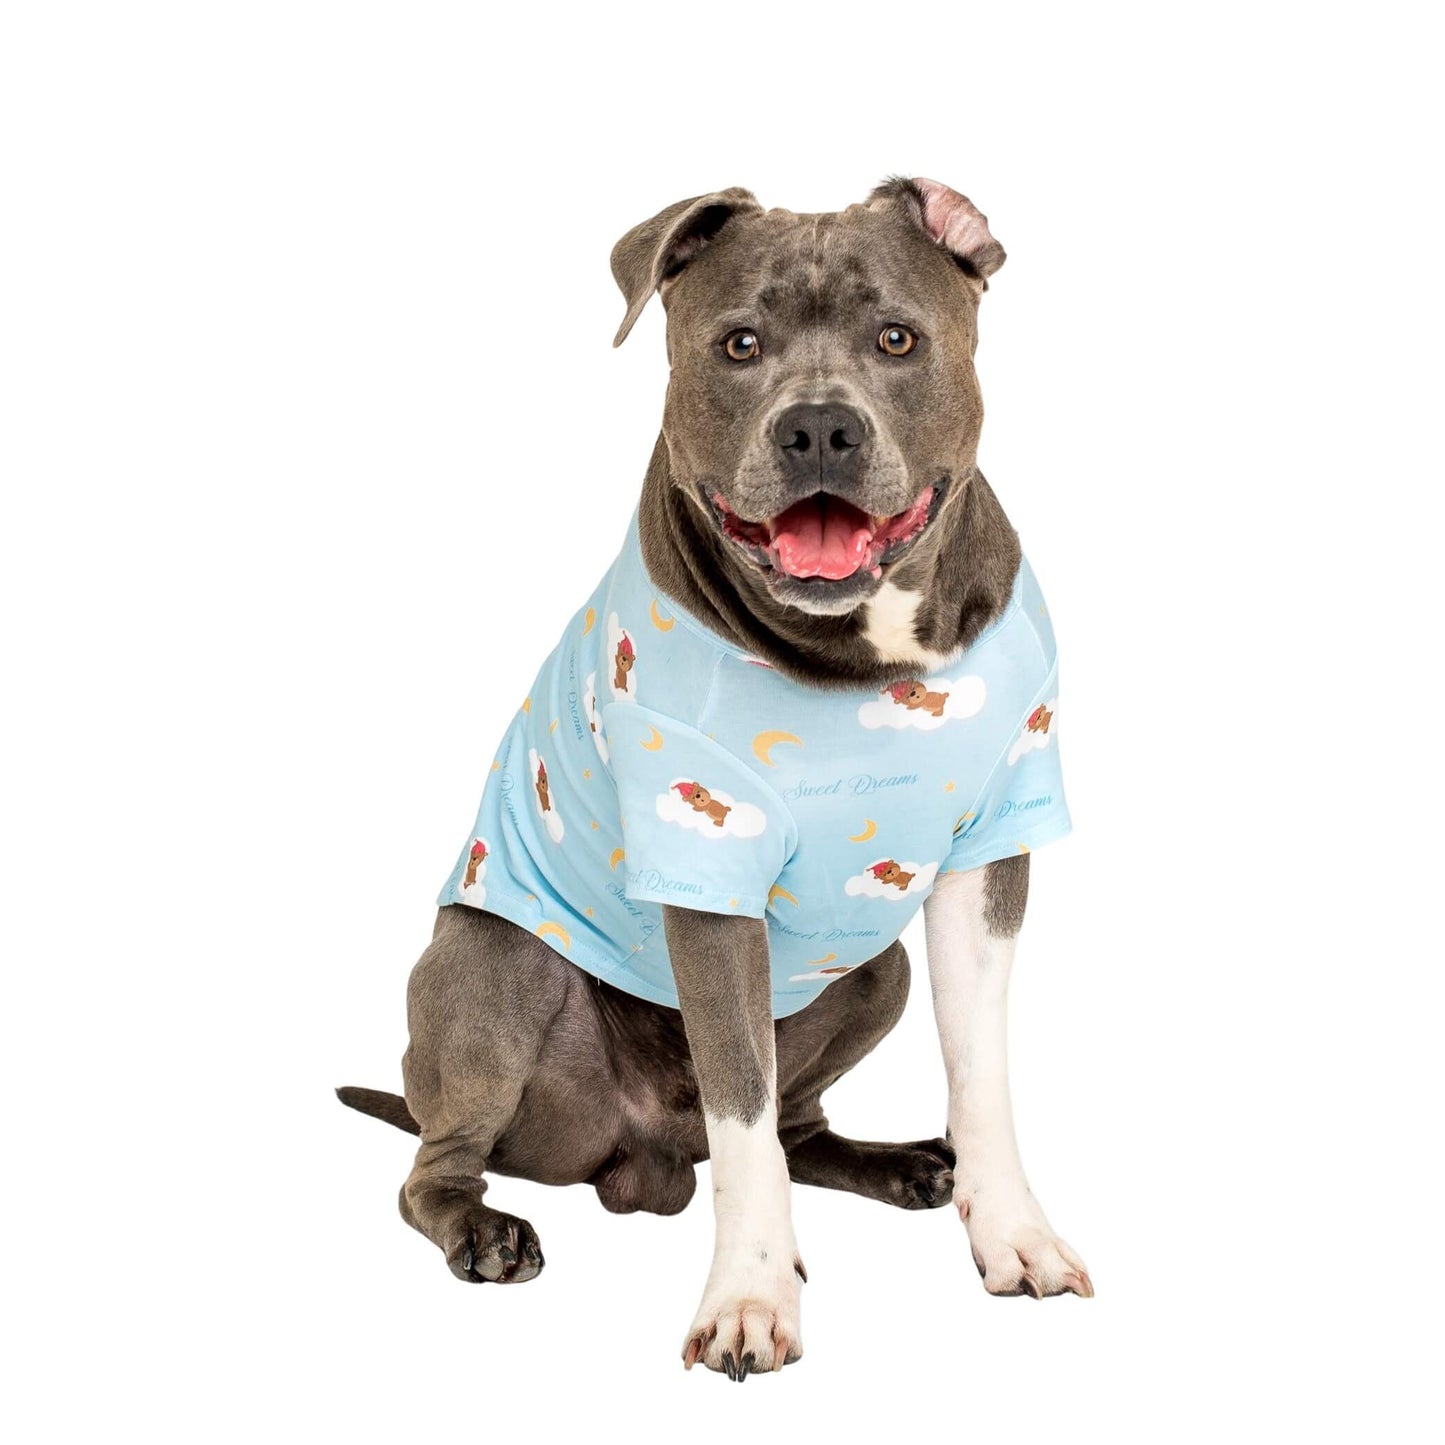 American Staffy wearing Vibrant Hound Lil Dreamer dog pyjamas.